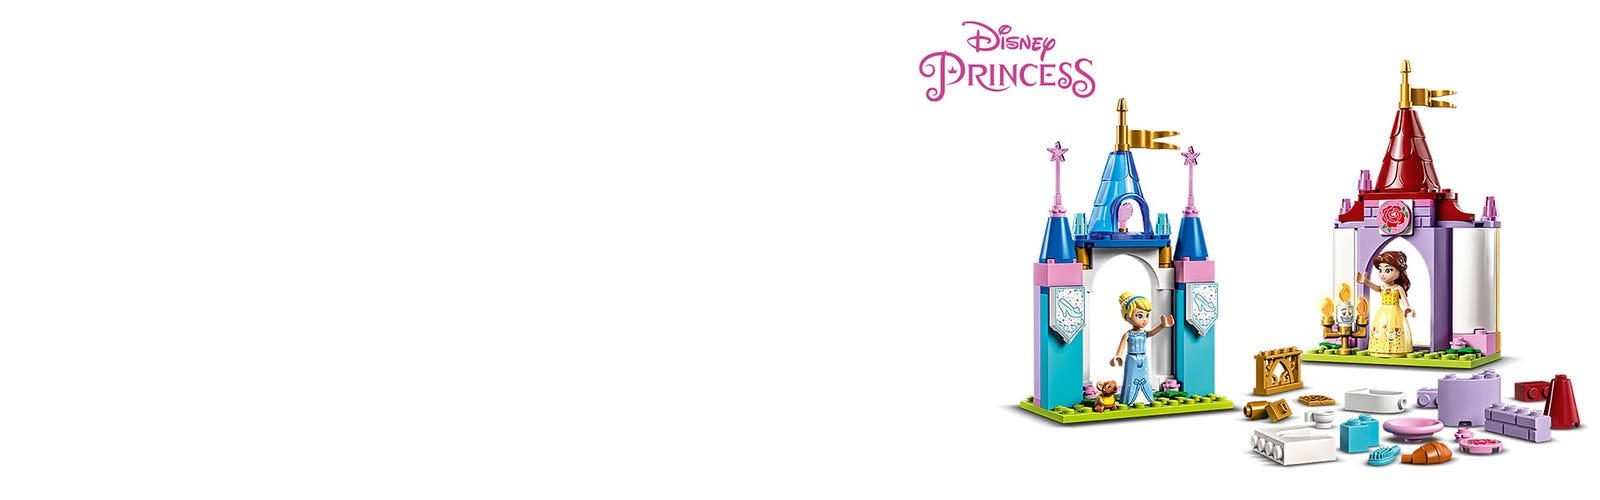 LEGO Disney: Princess Creative Castles (43219) – The Red Balloon Toy Store